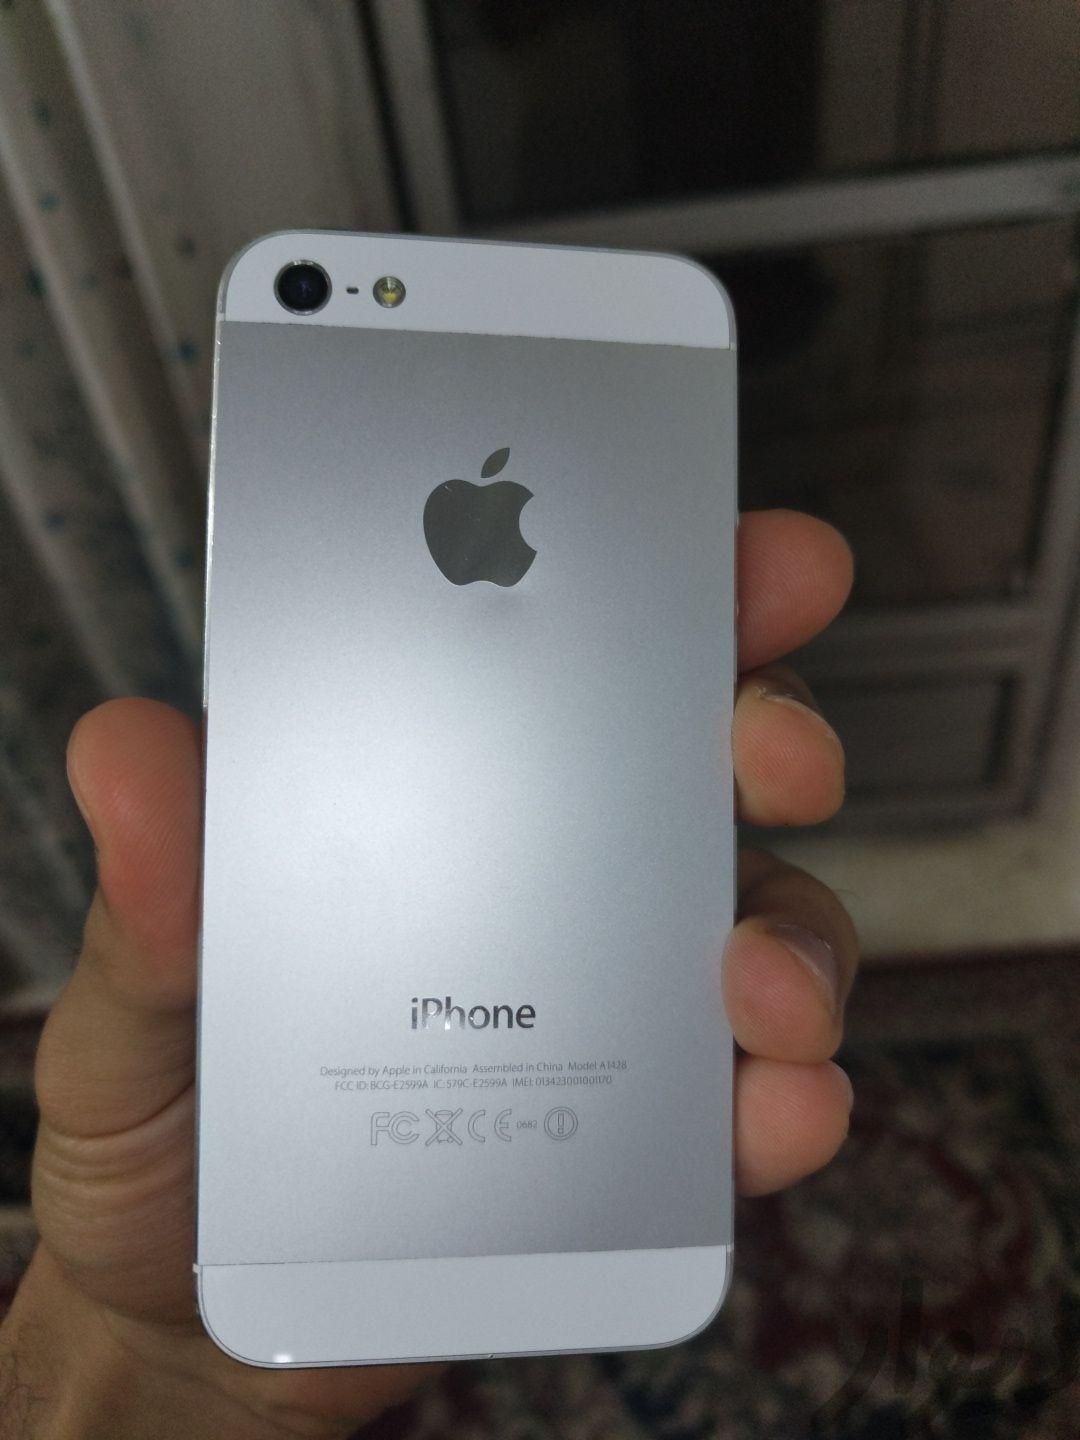 اپل iPhone 5 ۳۲ گیگابایت|موبایل|قم, کلهری|دیوار